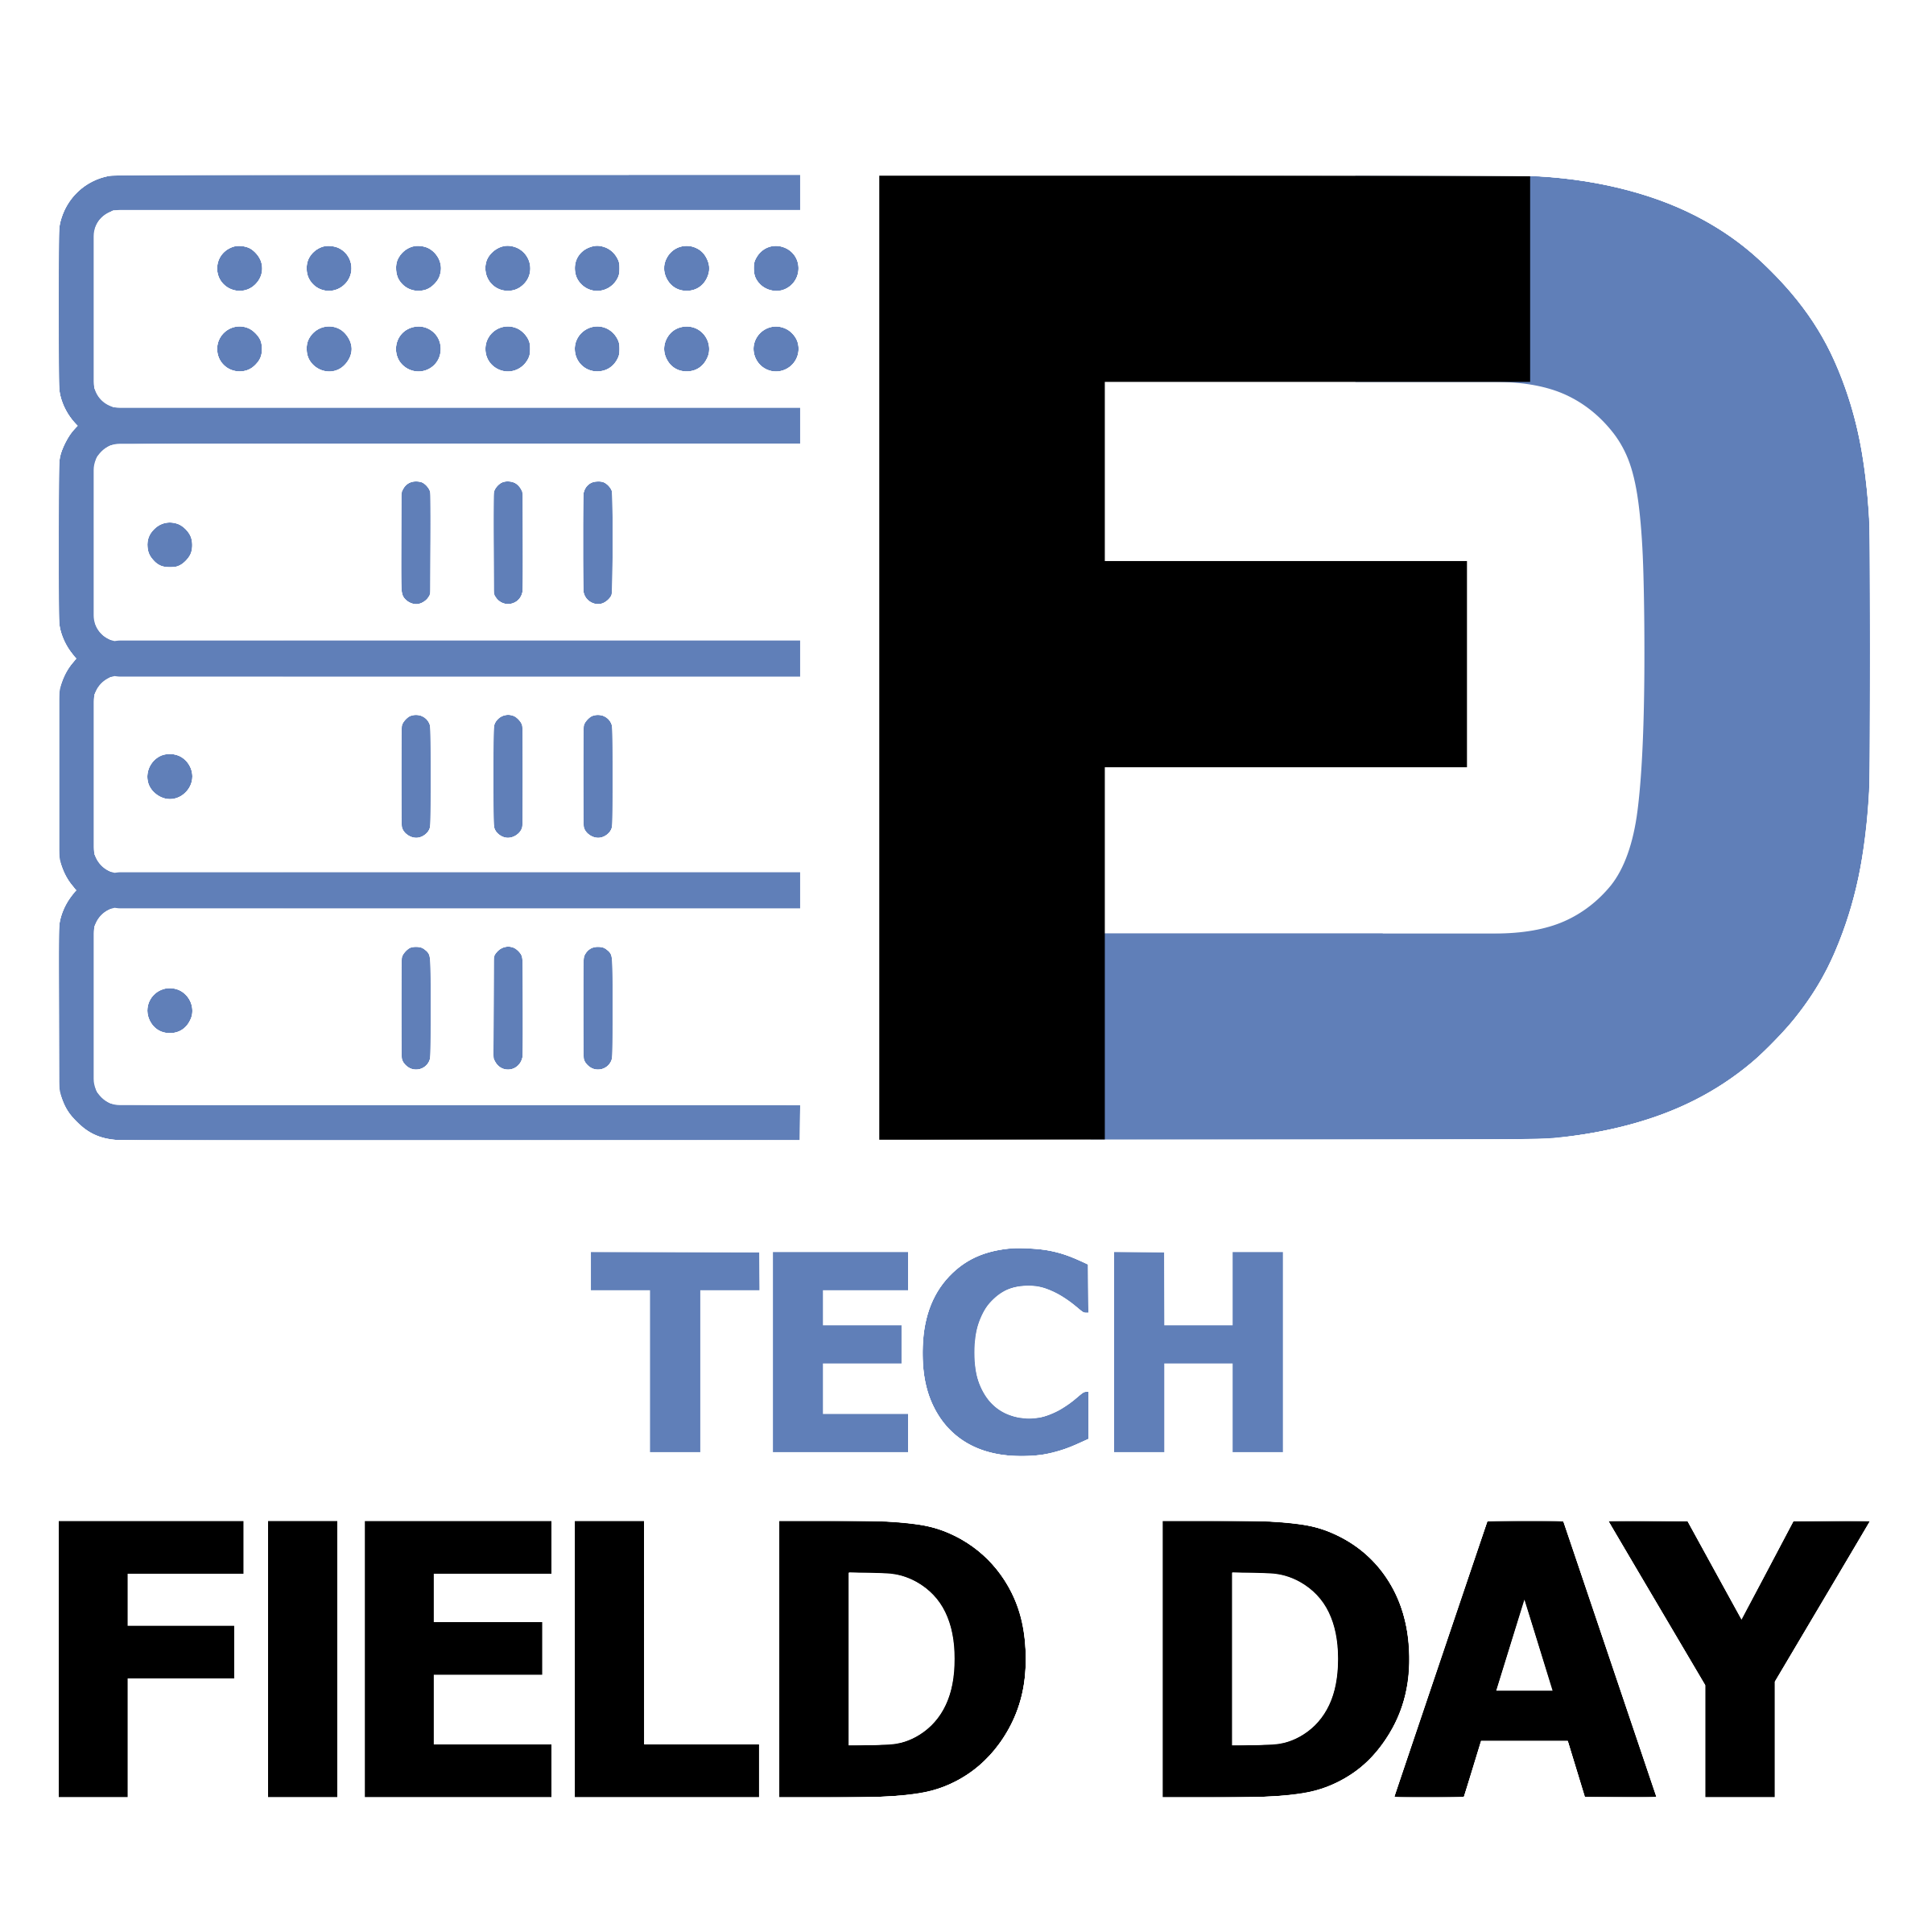 Keysight Technologies - Tech Field Day